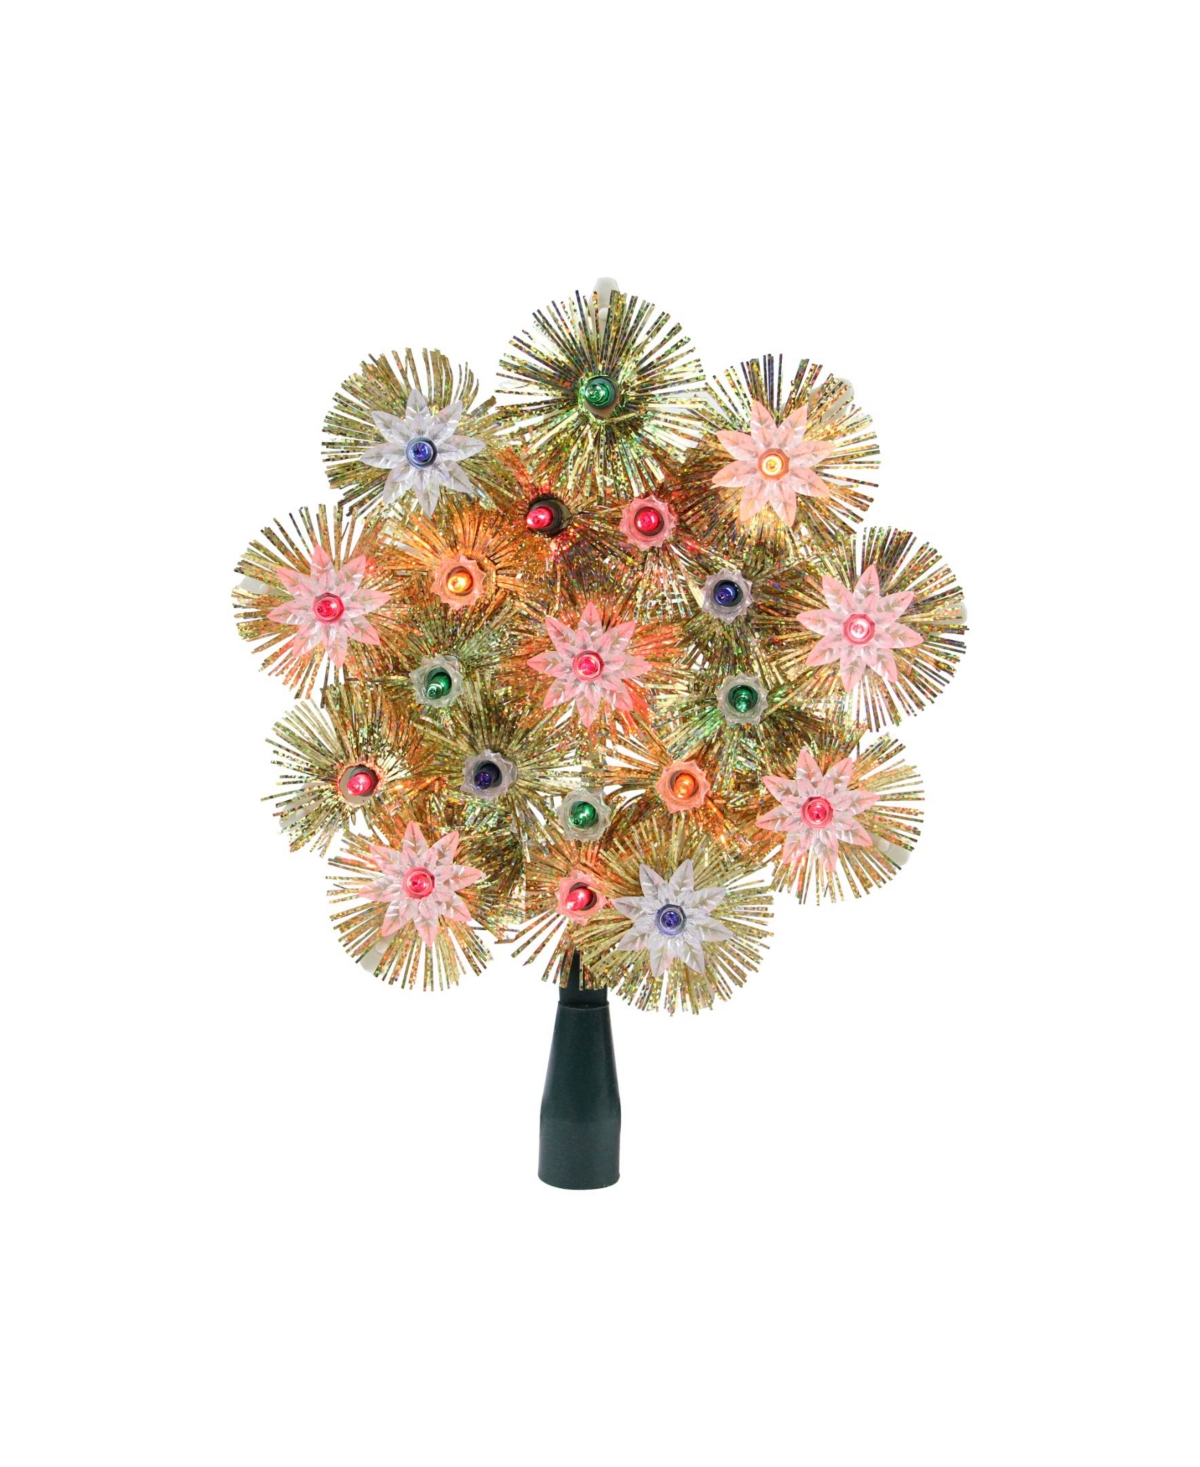 8" Retro Gold Tinsel Snowflake Christmas Tree Topper - Multi Lights - Gold